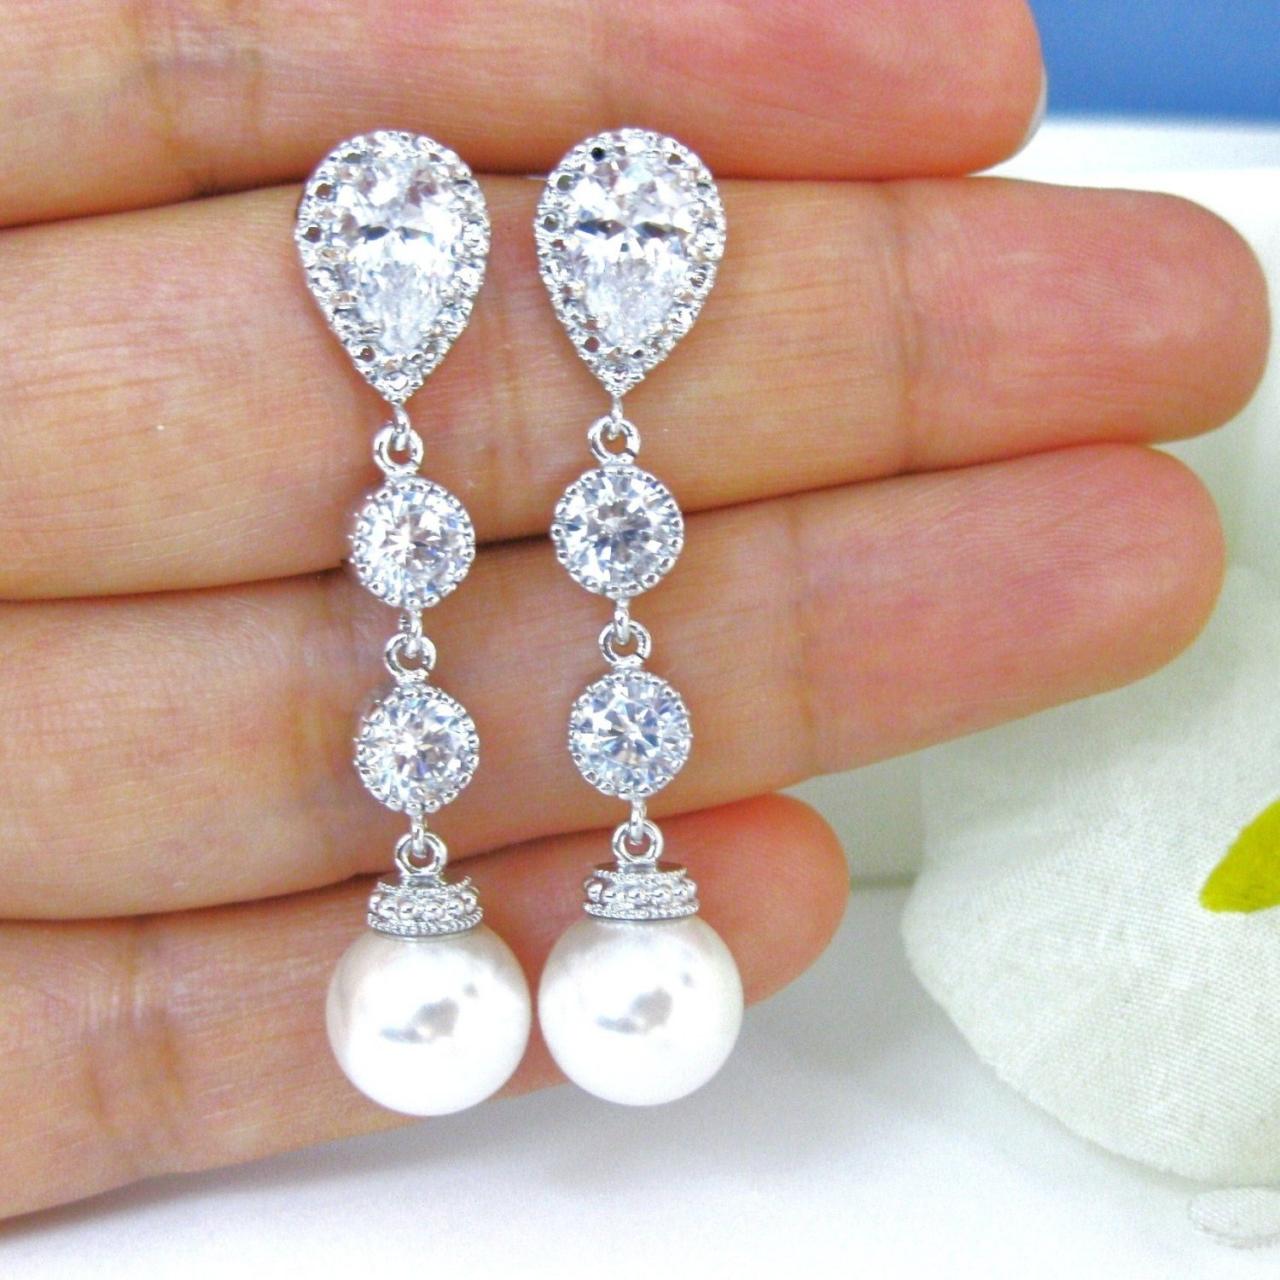 Bridal Pearl Earrings Swarovski 10mm Round Pearl Earrings Wedding Jewelry Bridesmaid Gift Cubic Zirconia Earrings (e039)